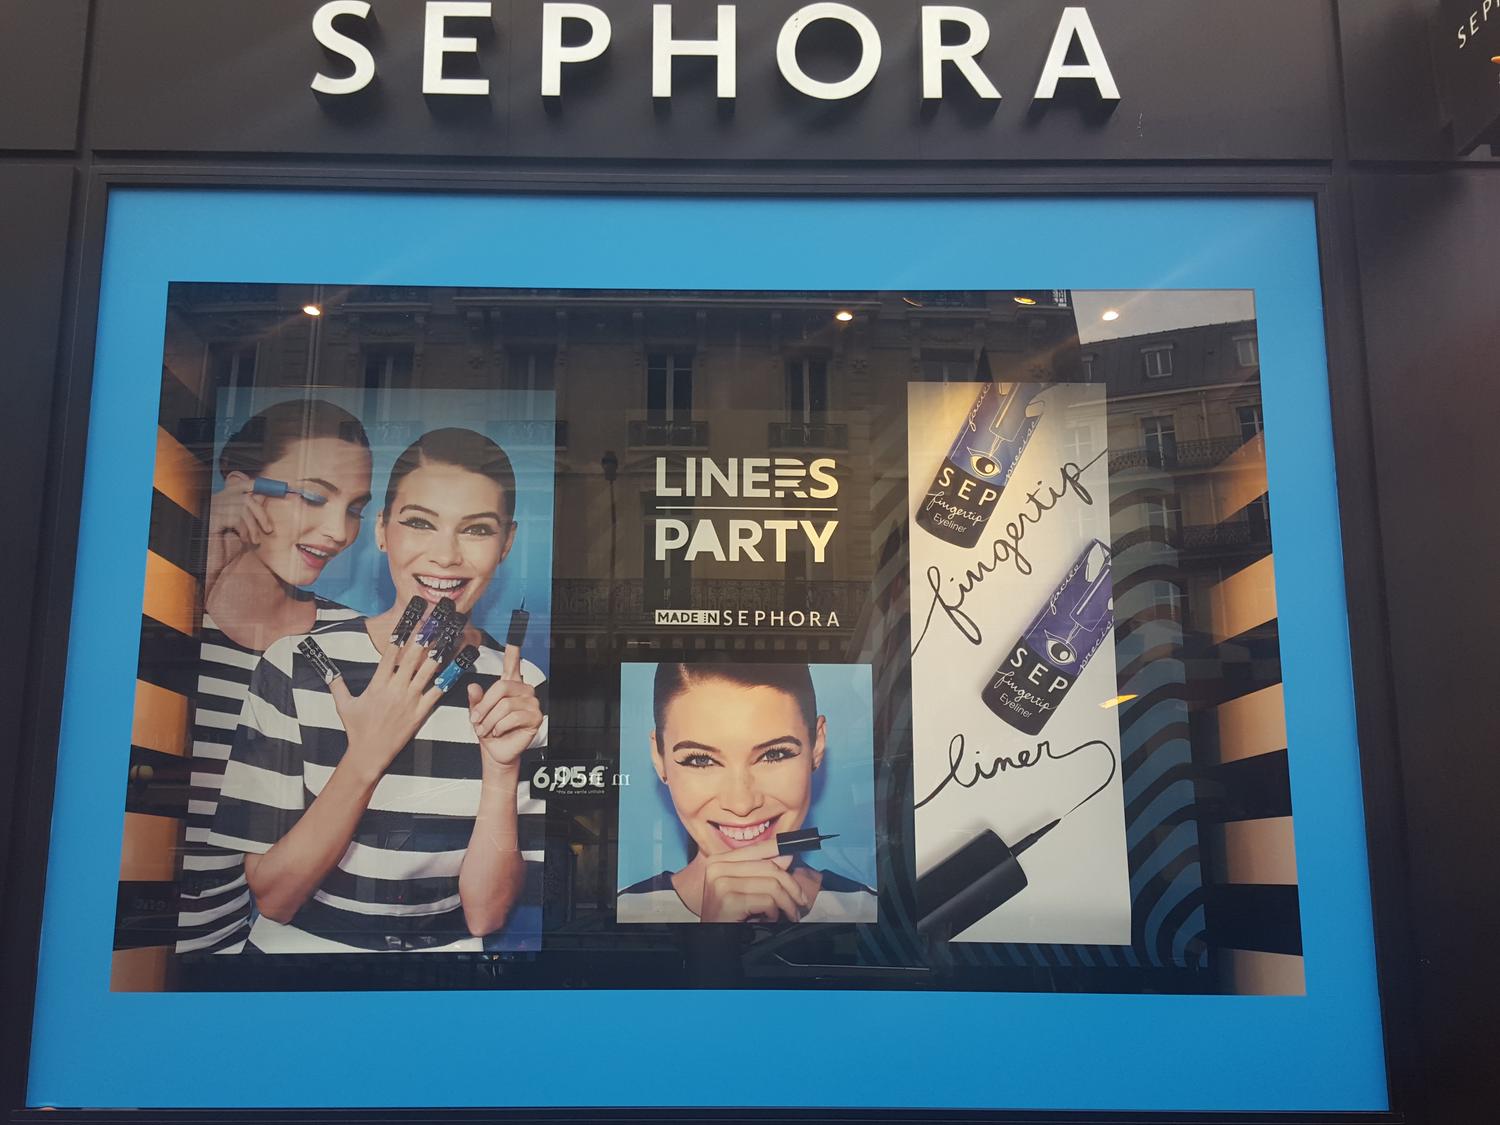 Sephora Liners Party Window Display